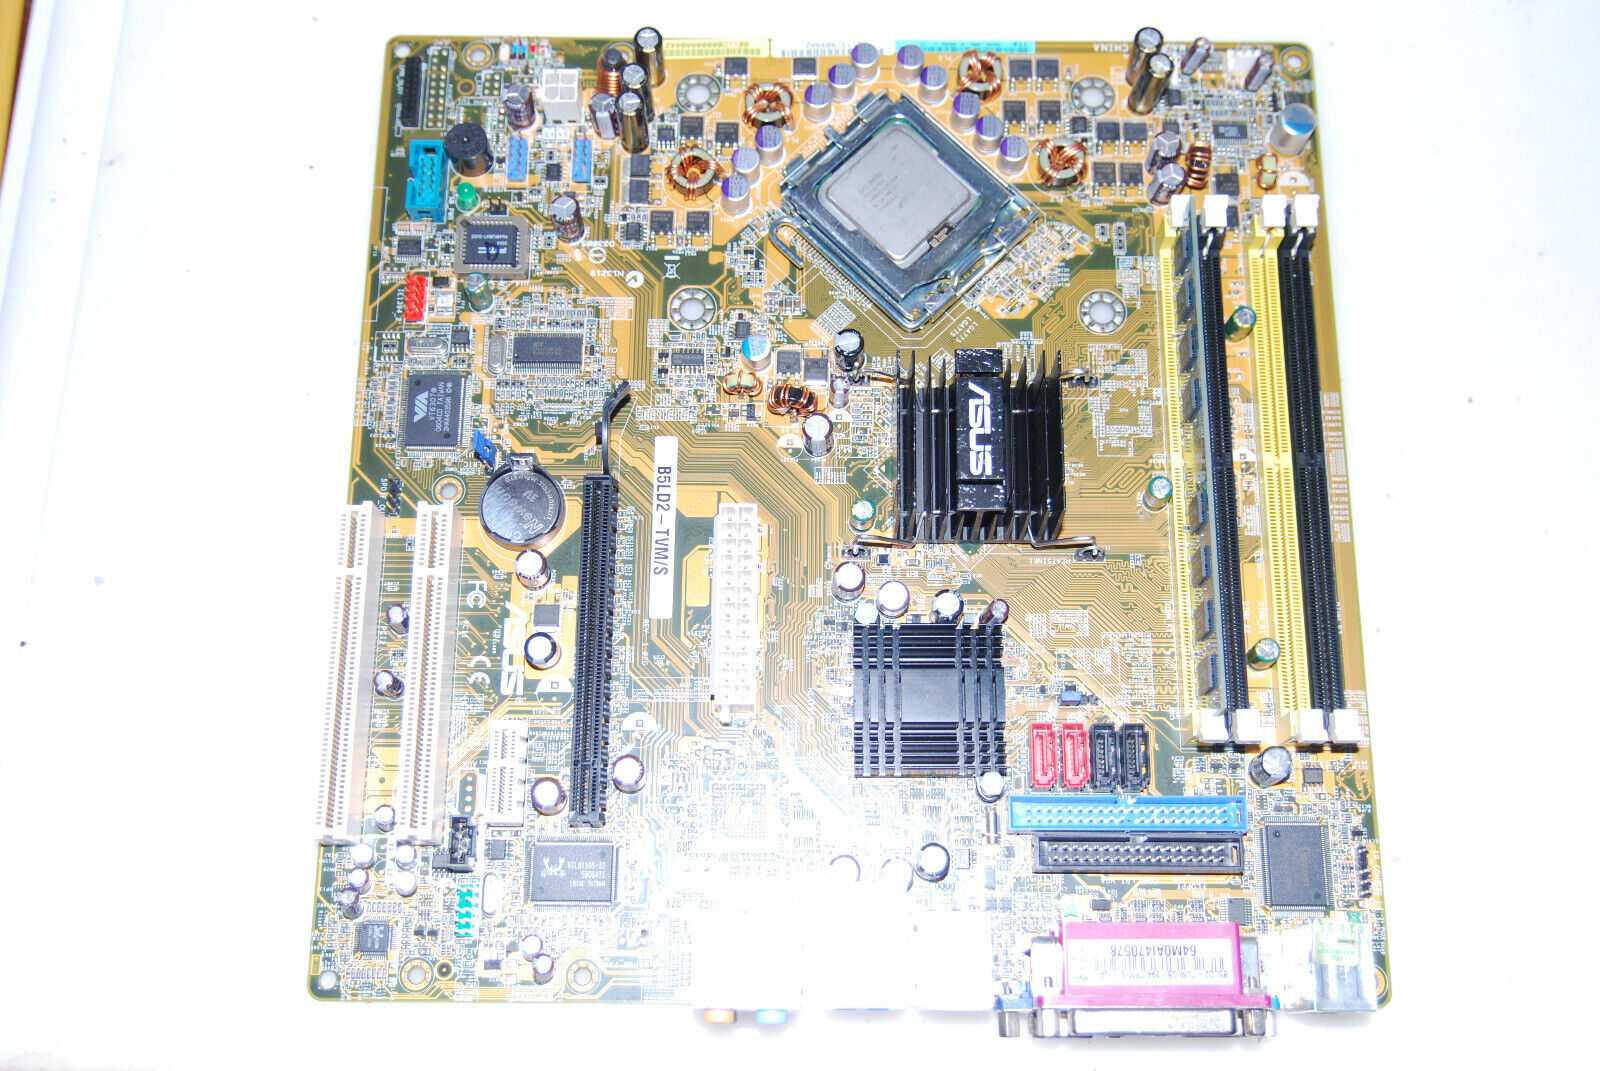 ASUS B5LD2-TVM/S socket LGA775 motherboard with SL7J6 cpu and 2Gb ram